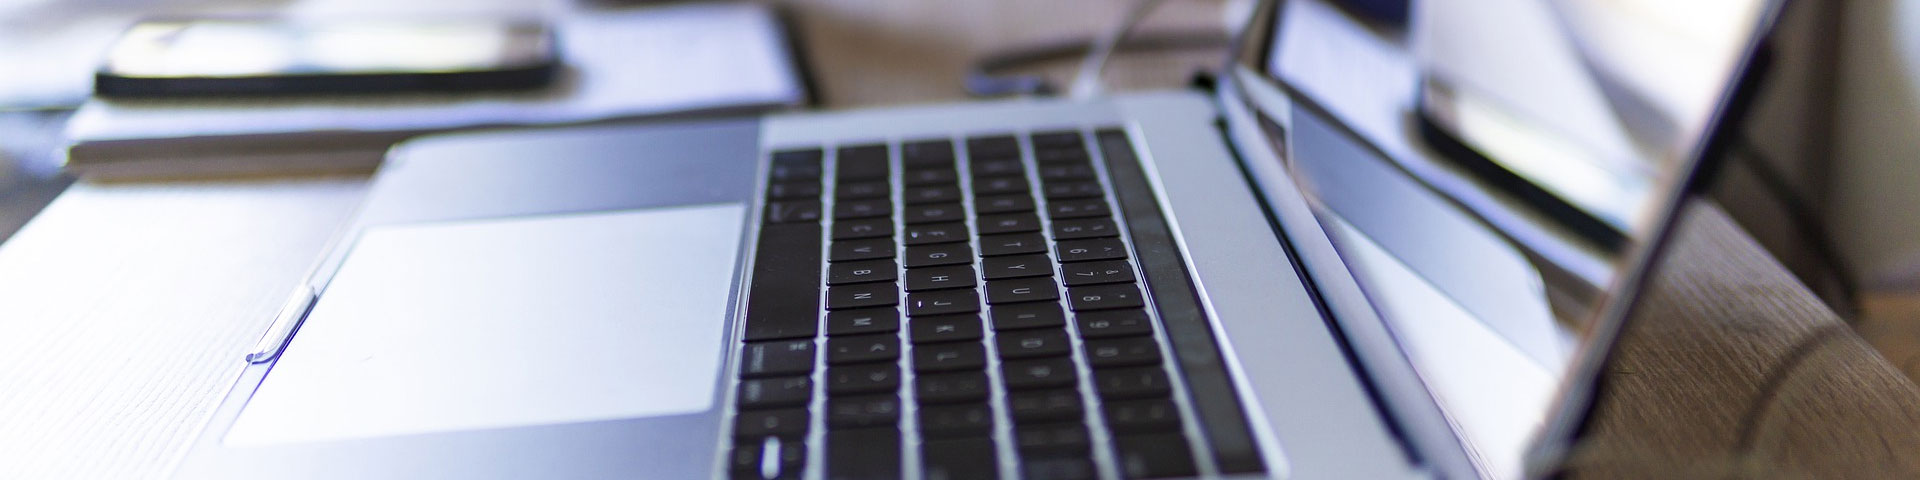 close up of laptop on desk